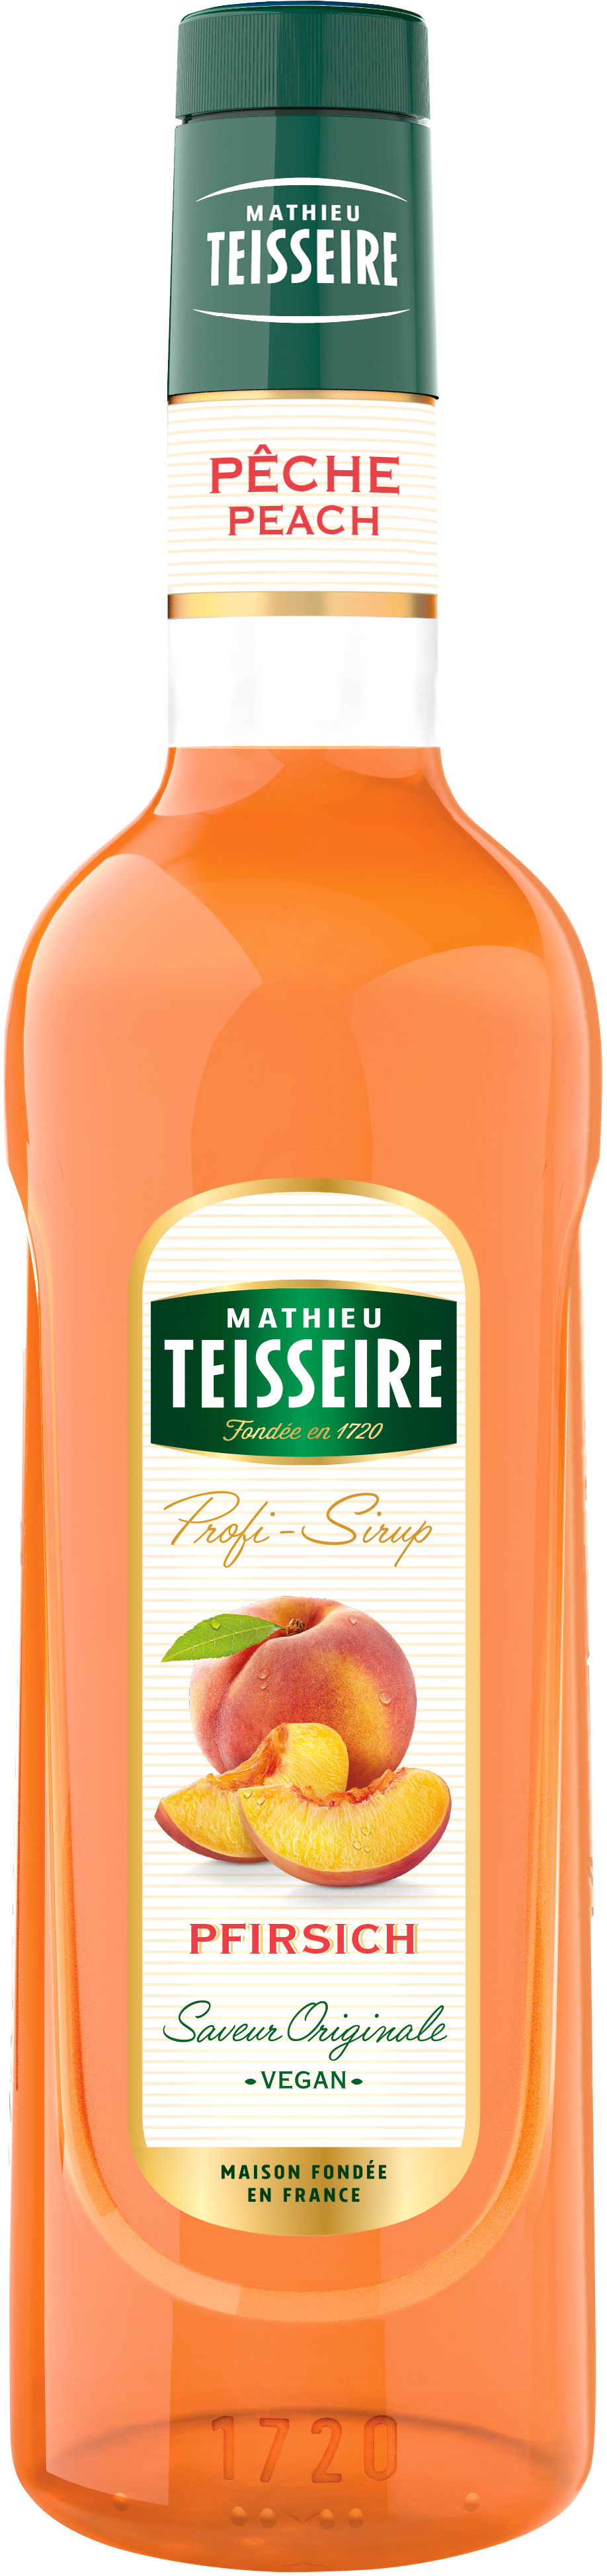 Teisseire Pfirsich Sirup - 0,7L